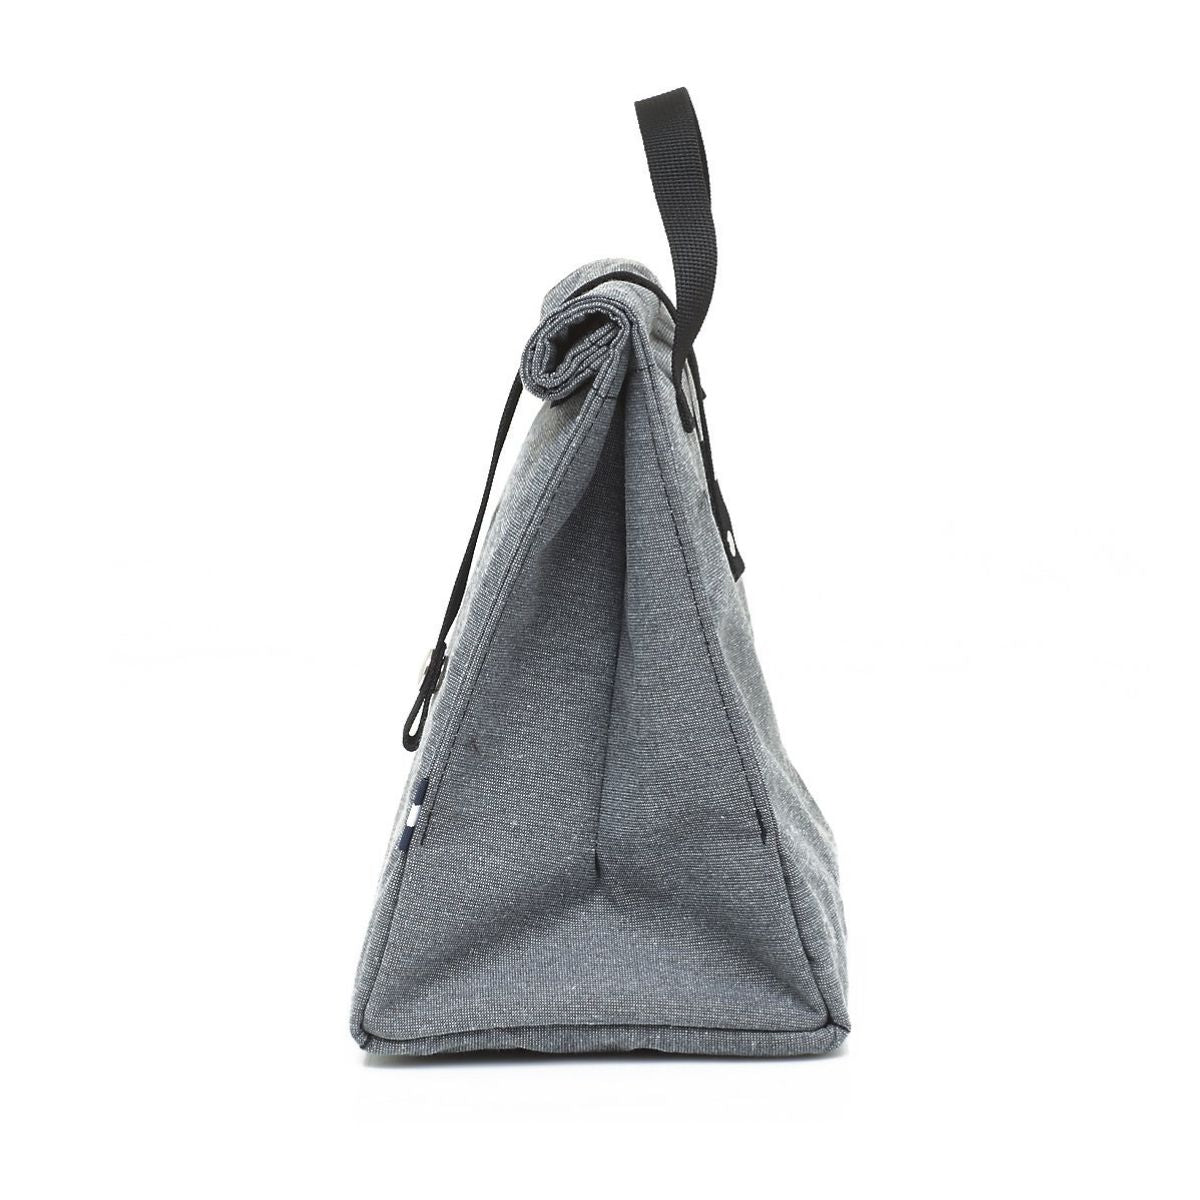 The Lunch Bags Original Ισοθερμική Τσάντα Stone Grey - 5lt